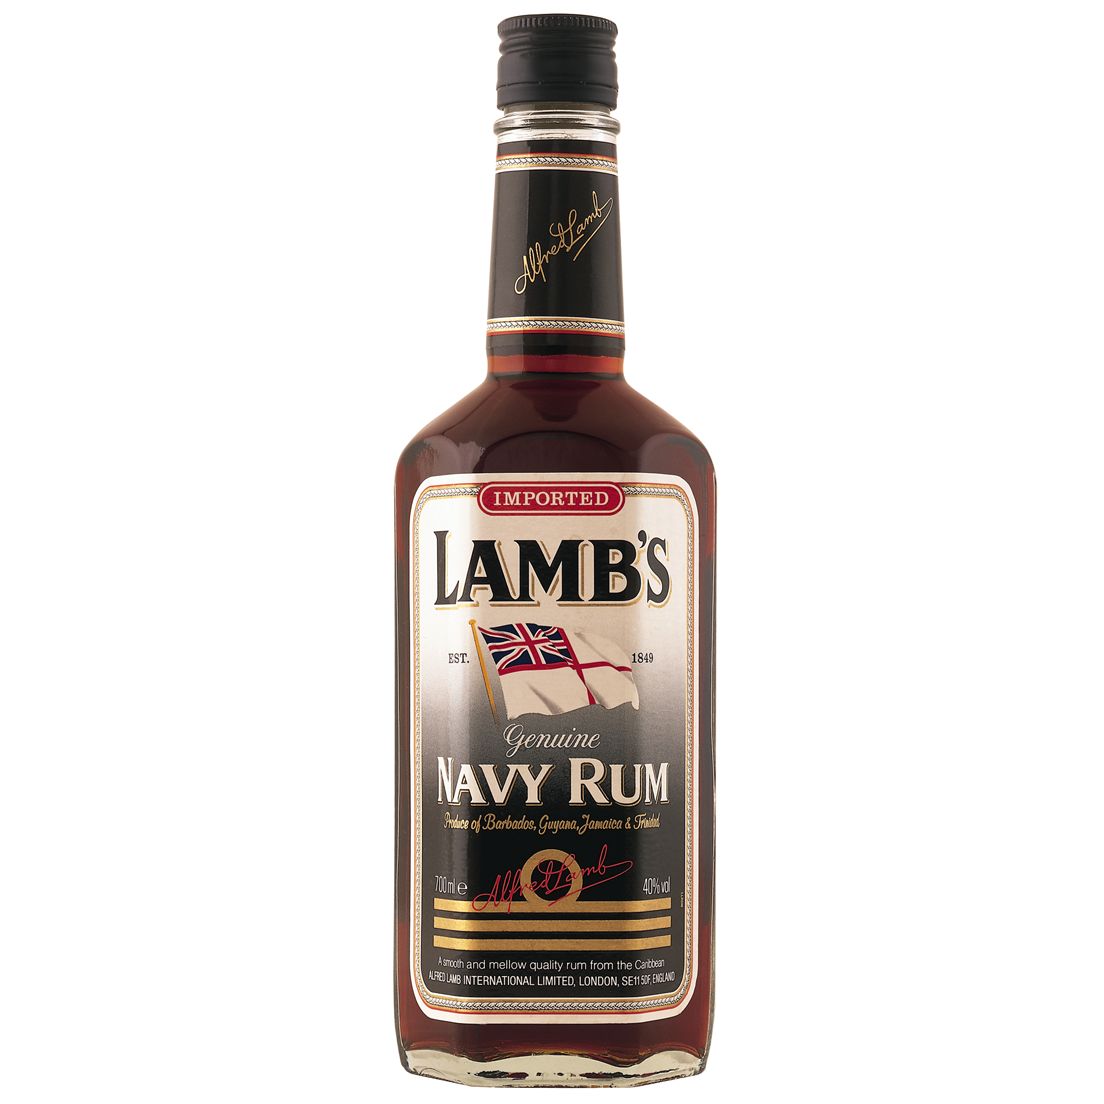 Lamb's Navy Rum at John Lewis